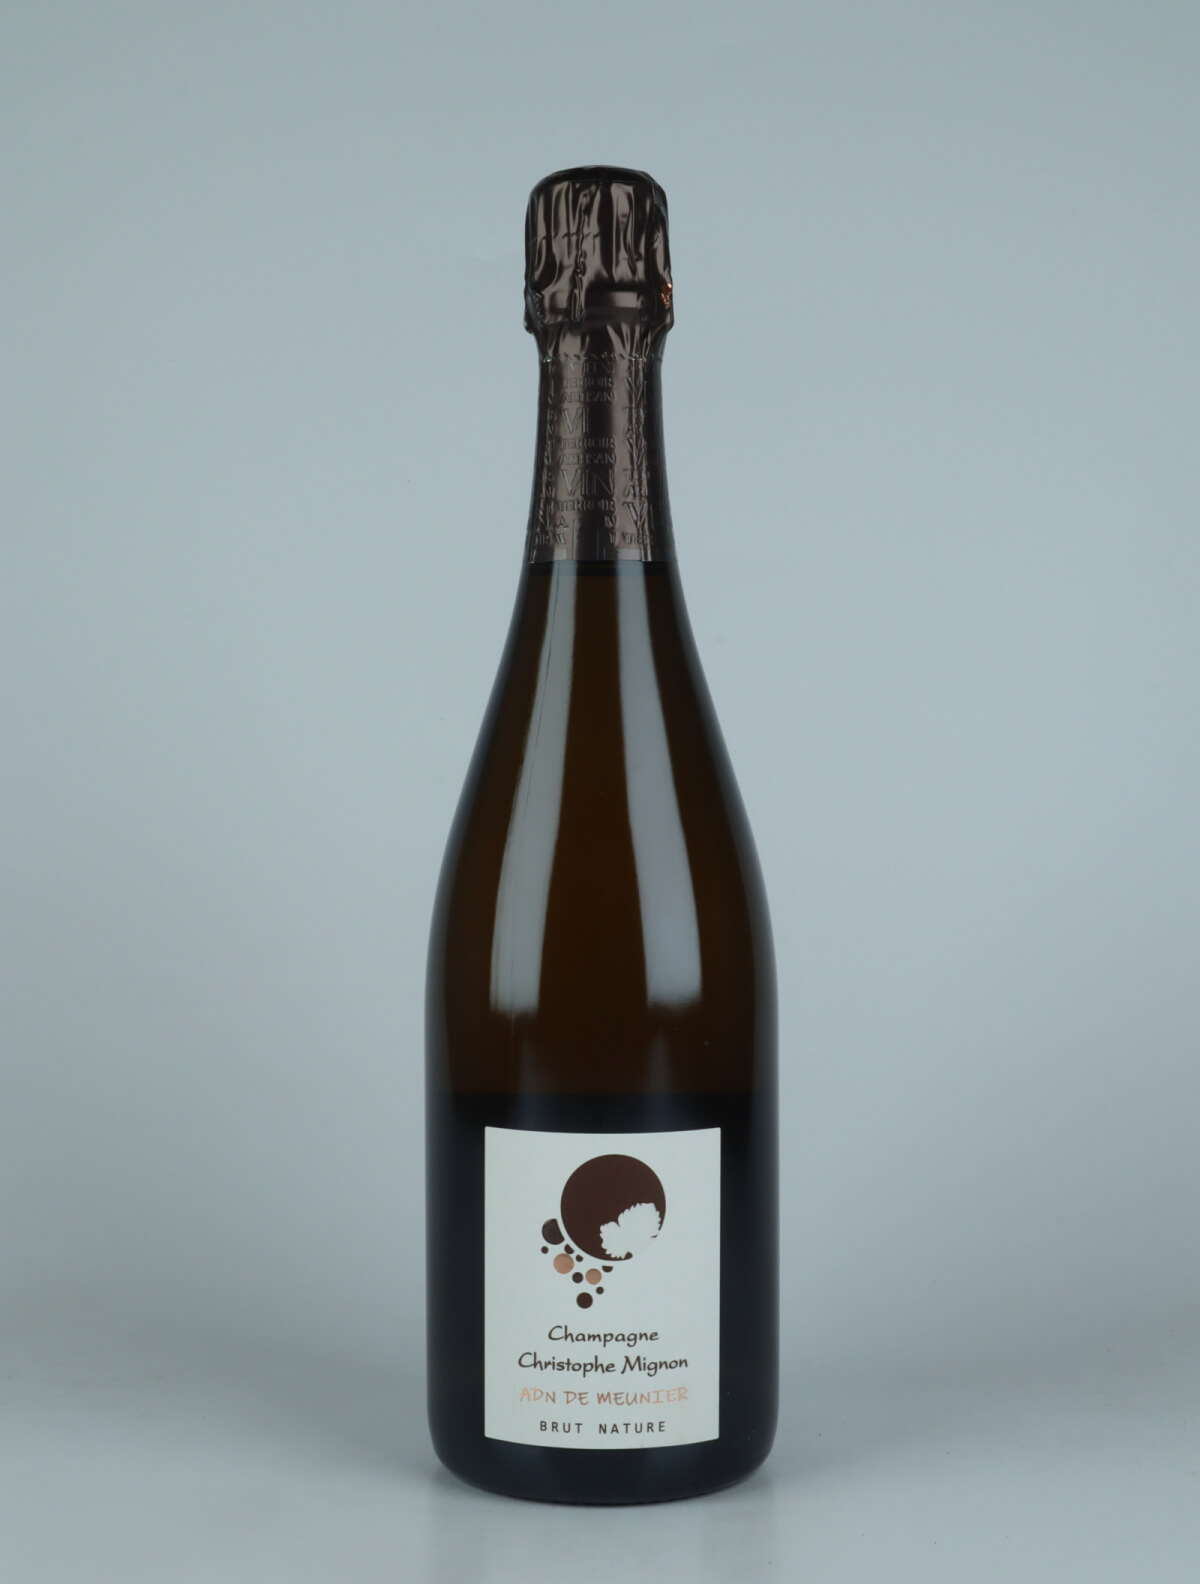 A bottle N.V. (2019/2020) ADN de Meunier Brut Nature Sparkling from Christophe Mignon, Champagne in France